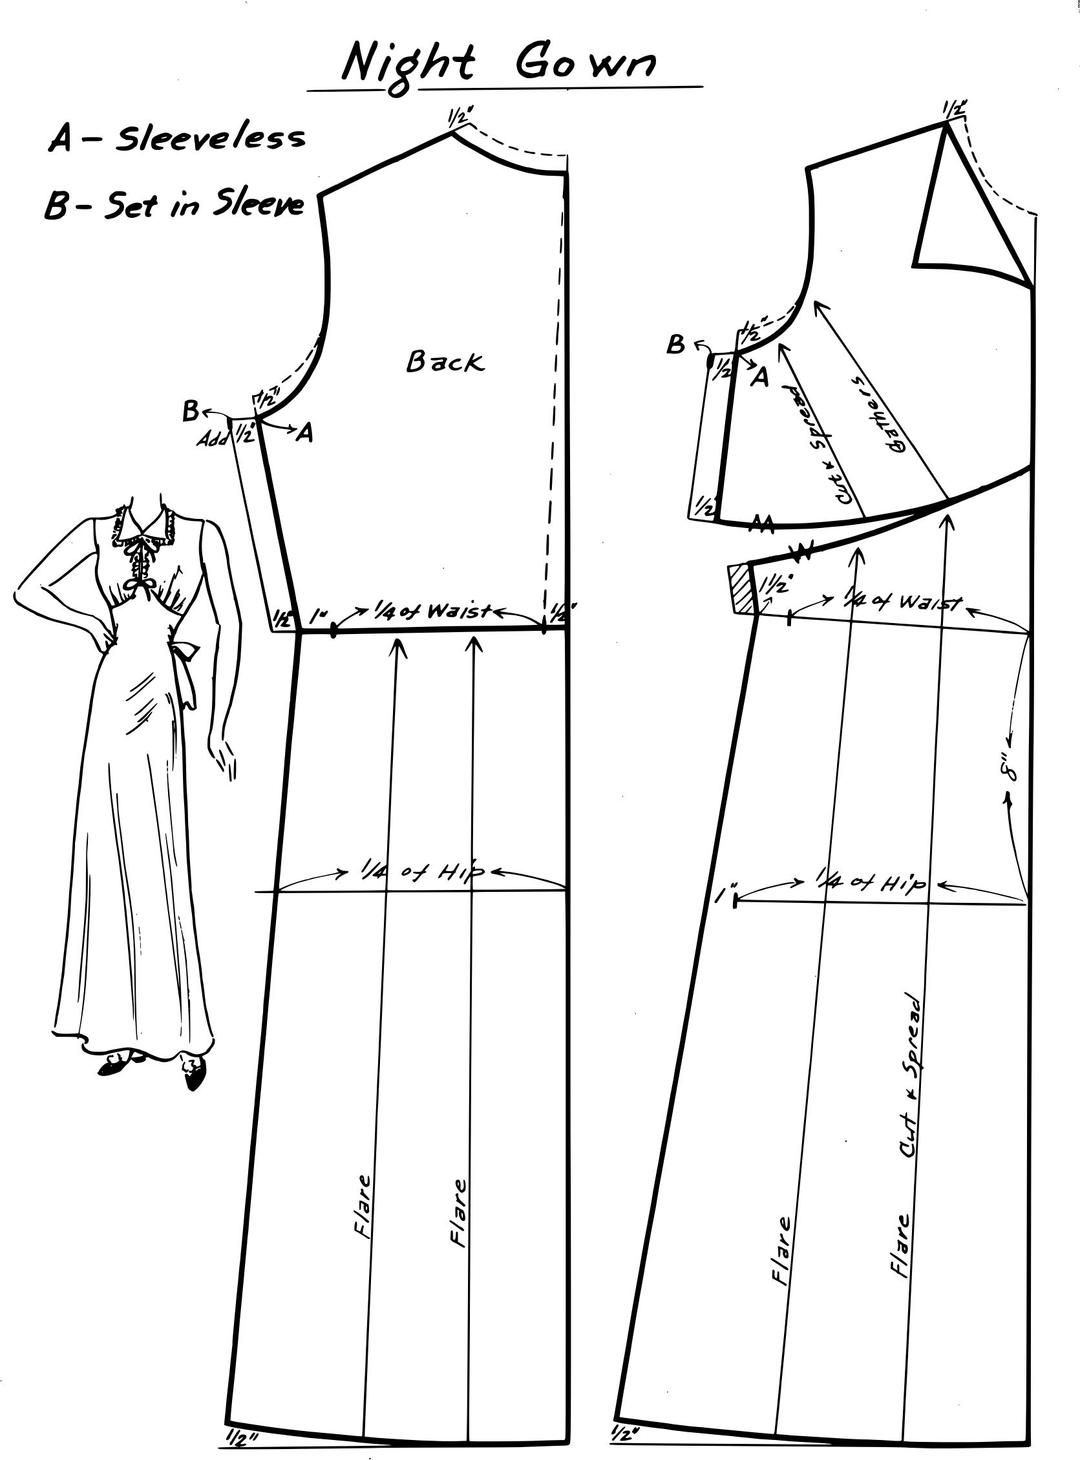 K. Kimata's Night Gown - sheet #1 png transparent